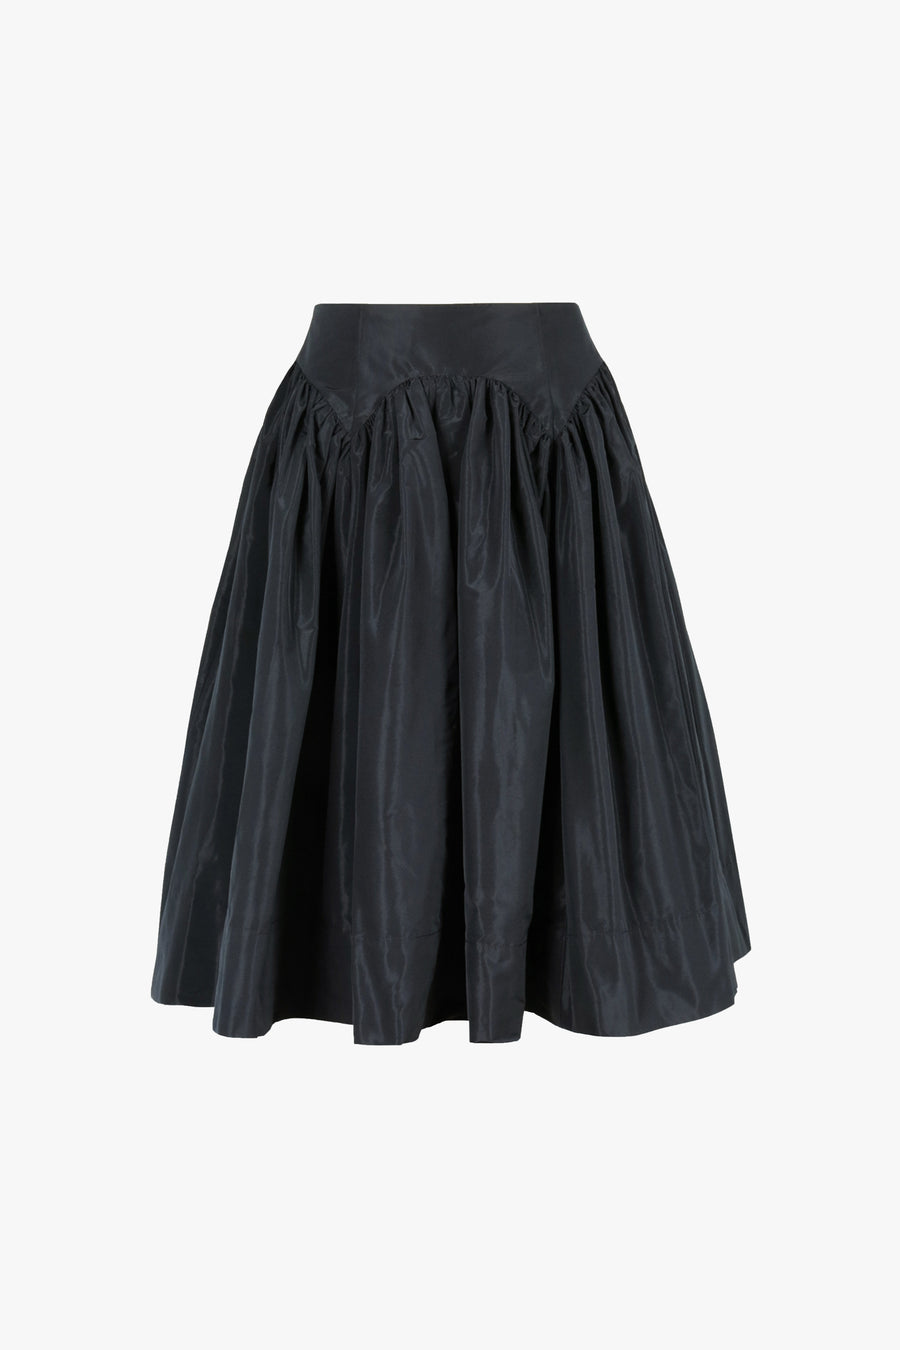 Midi skirt in black taffeta with garter silhouette